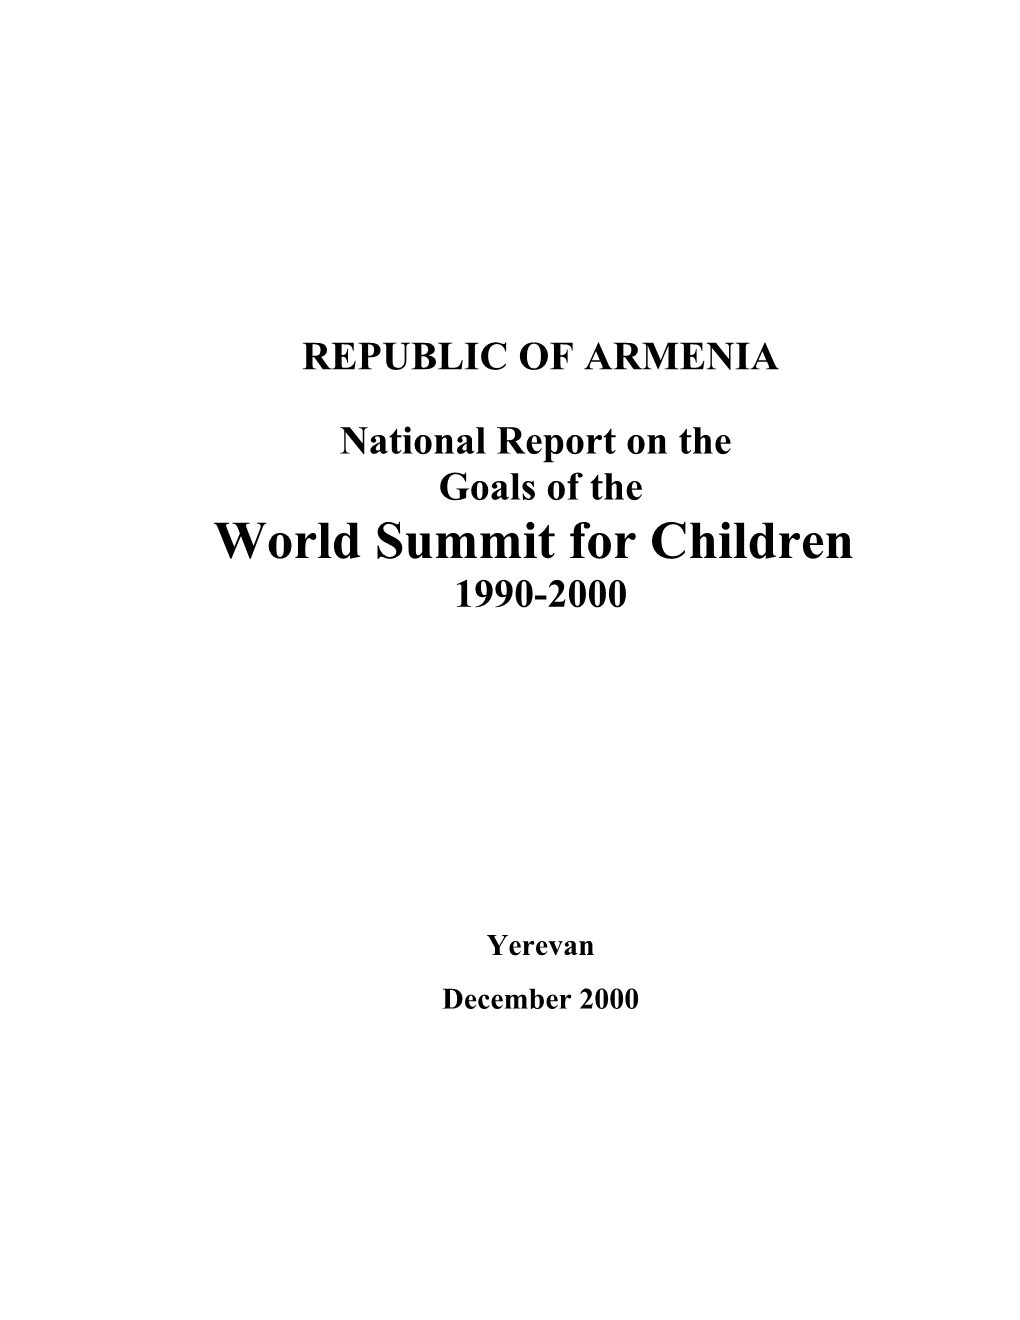 World Summit for Children Armenia National Report